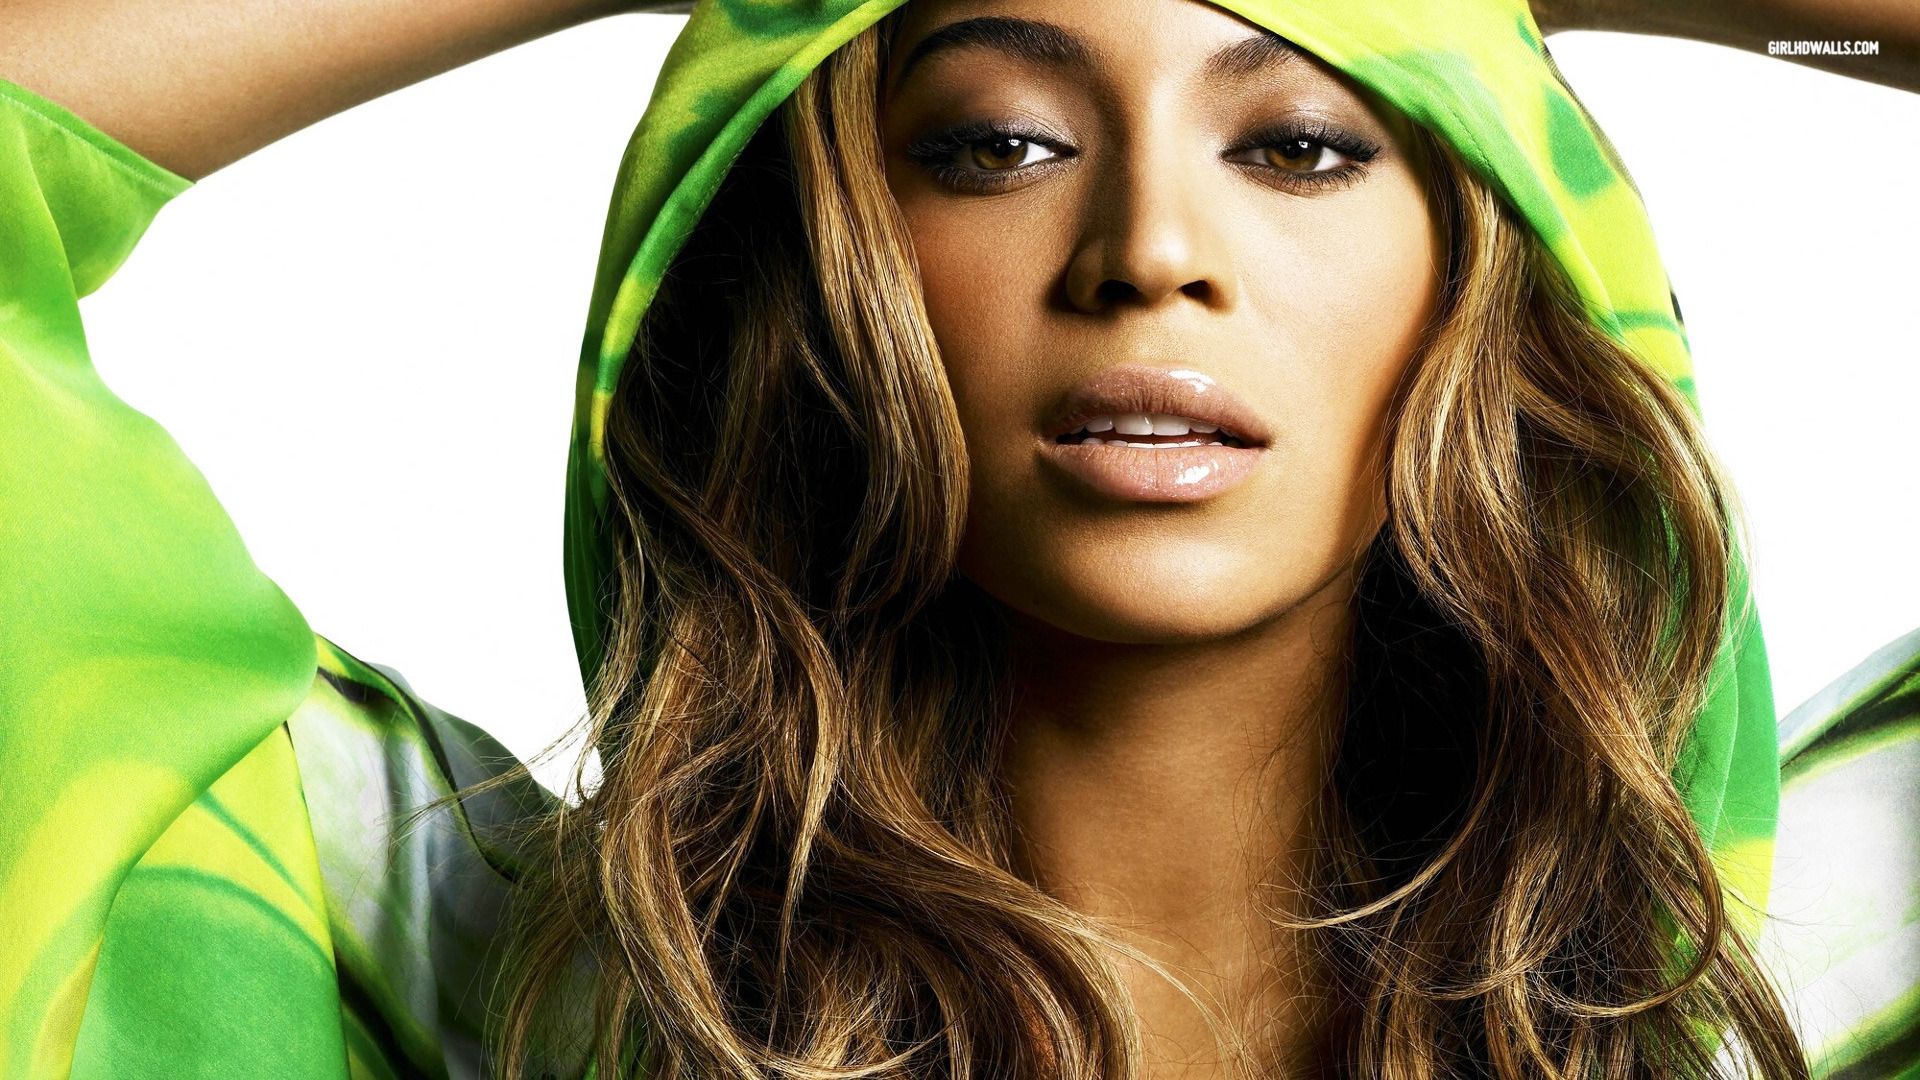 Savage Beyonce: “Οι γοφοί μου κάνουν τικ-τοκ όταν χορεύουν”